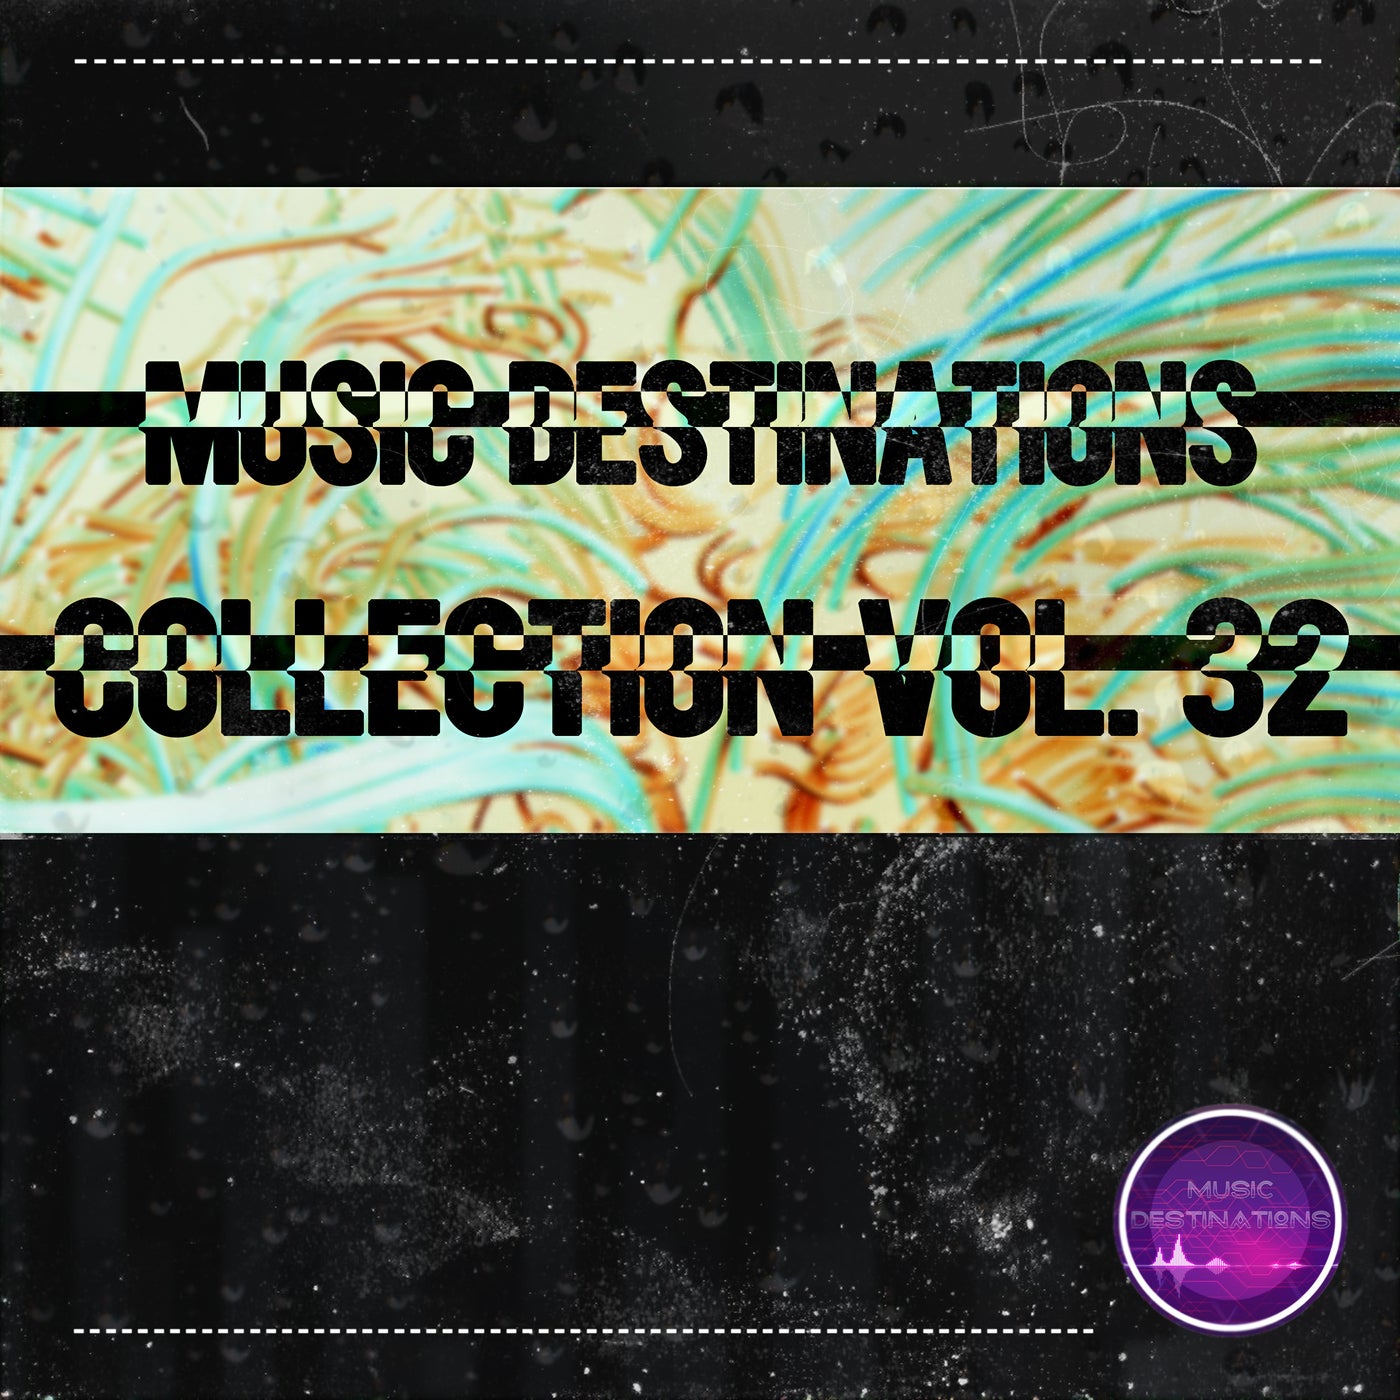 Music Destinations Collection Vol. 32